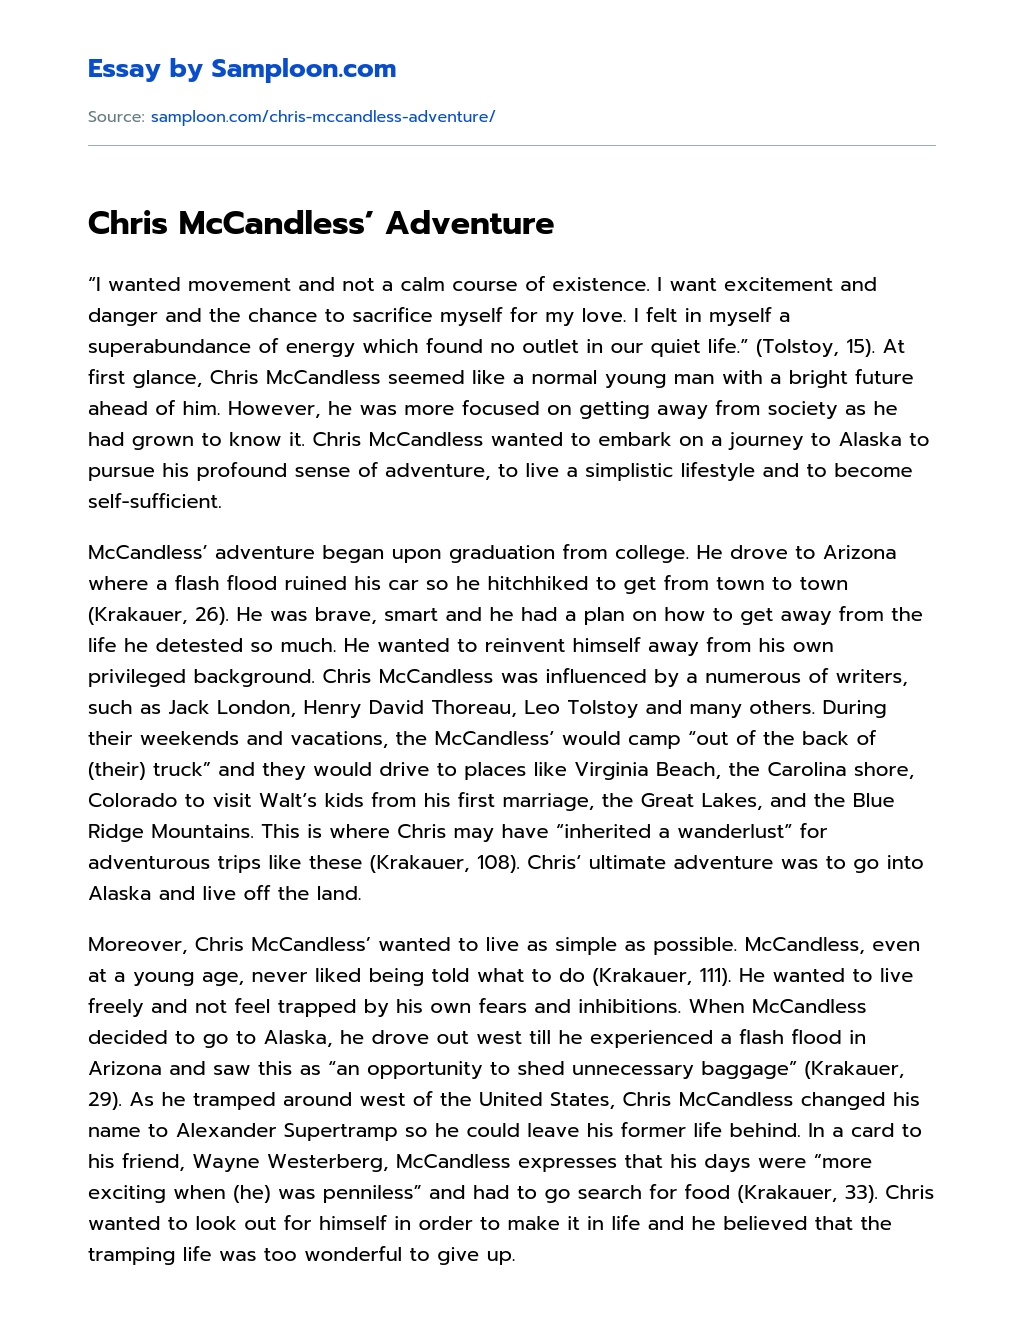 Chris McCandless’ Adventure Personal Essay essay